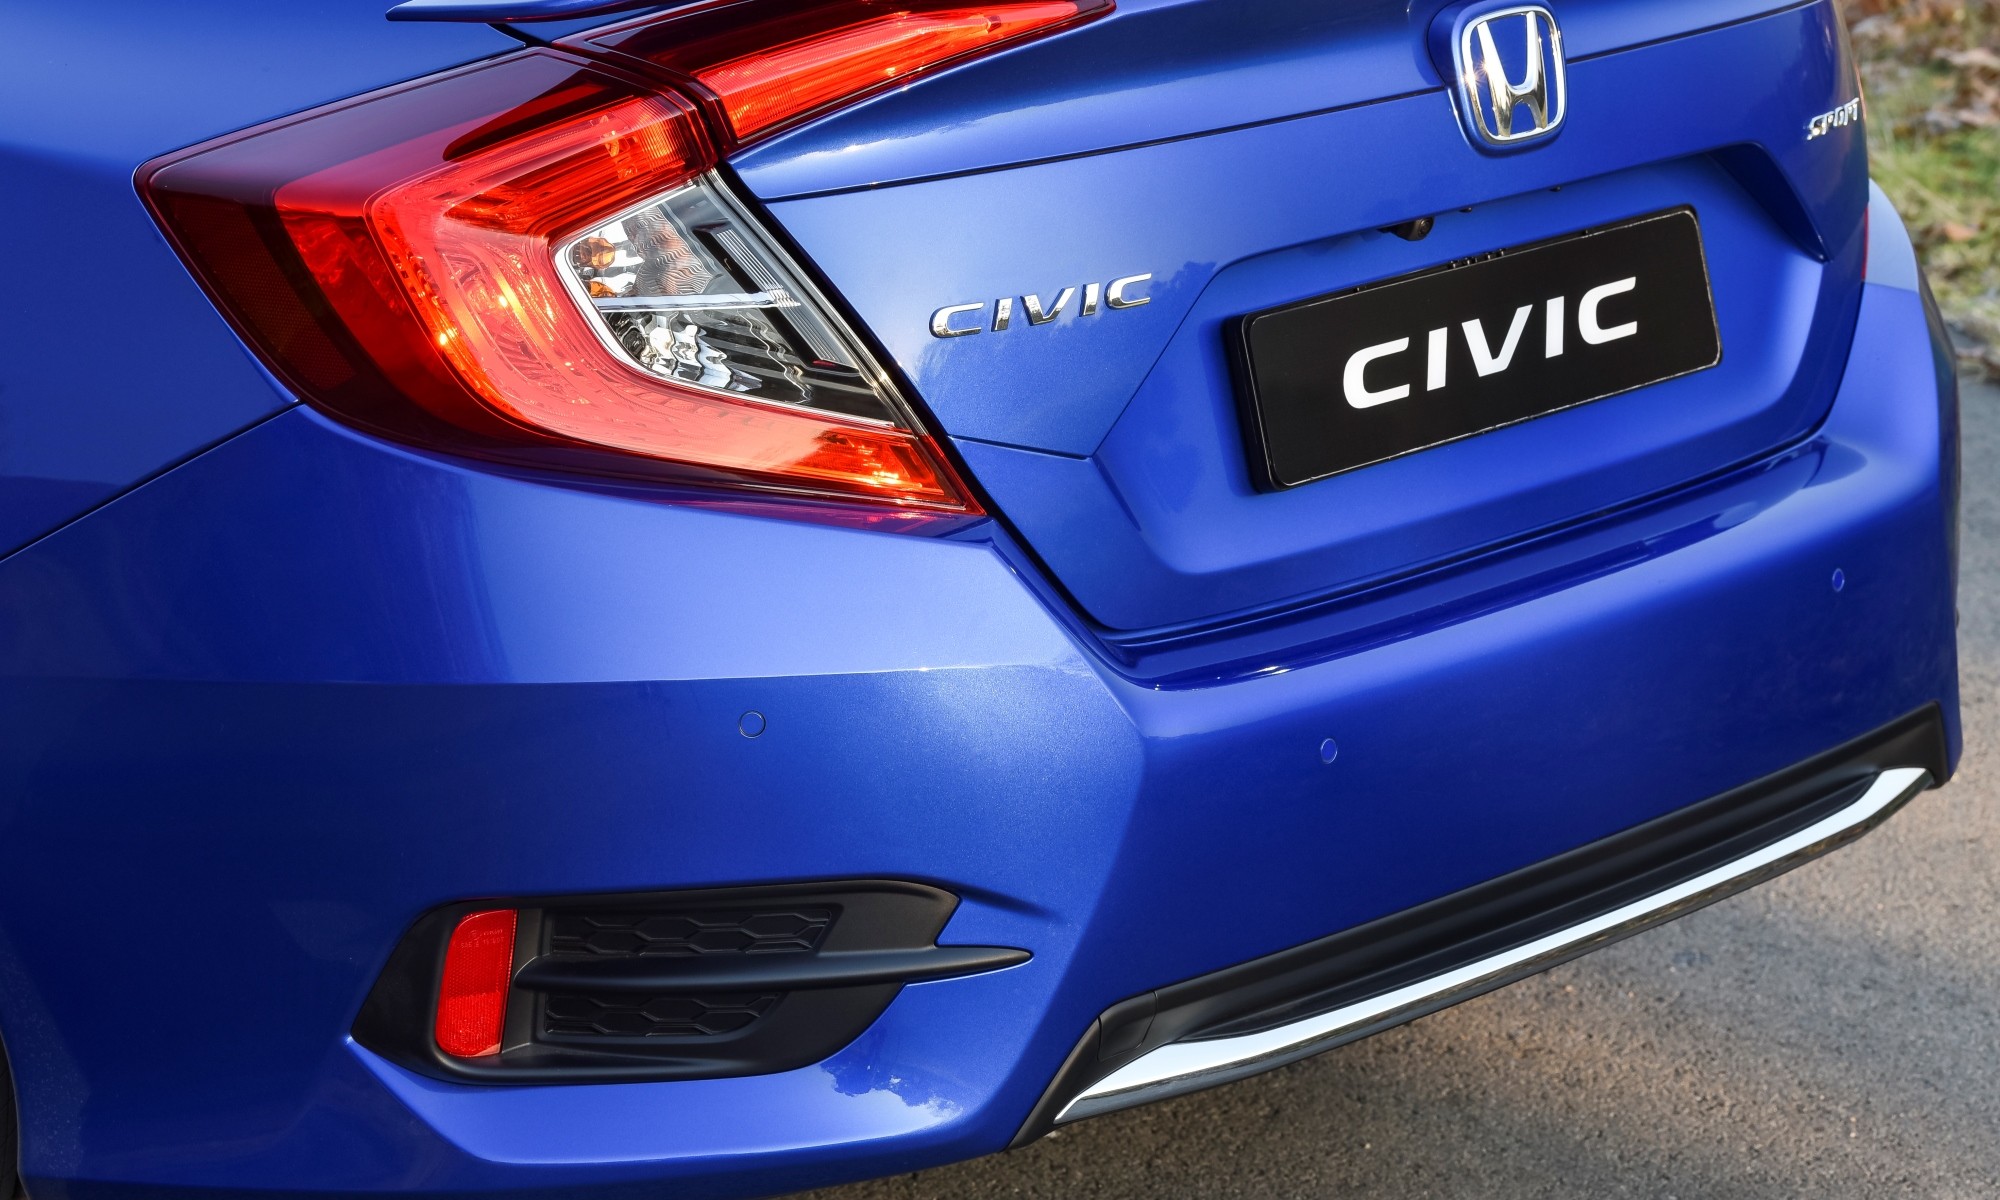 Facelifted Honda Civic rear